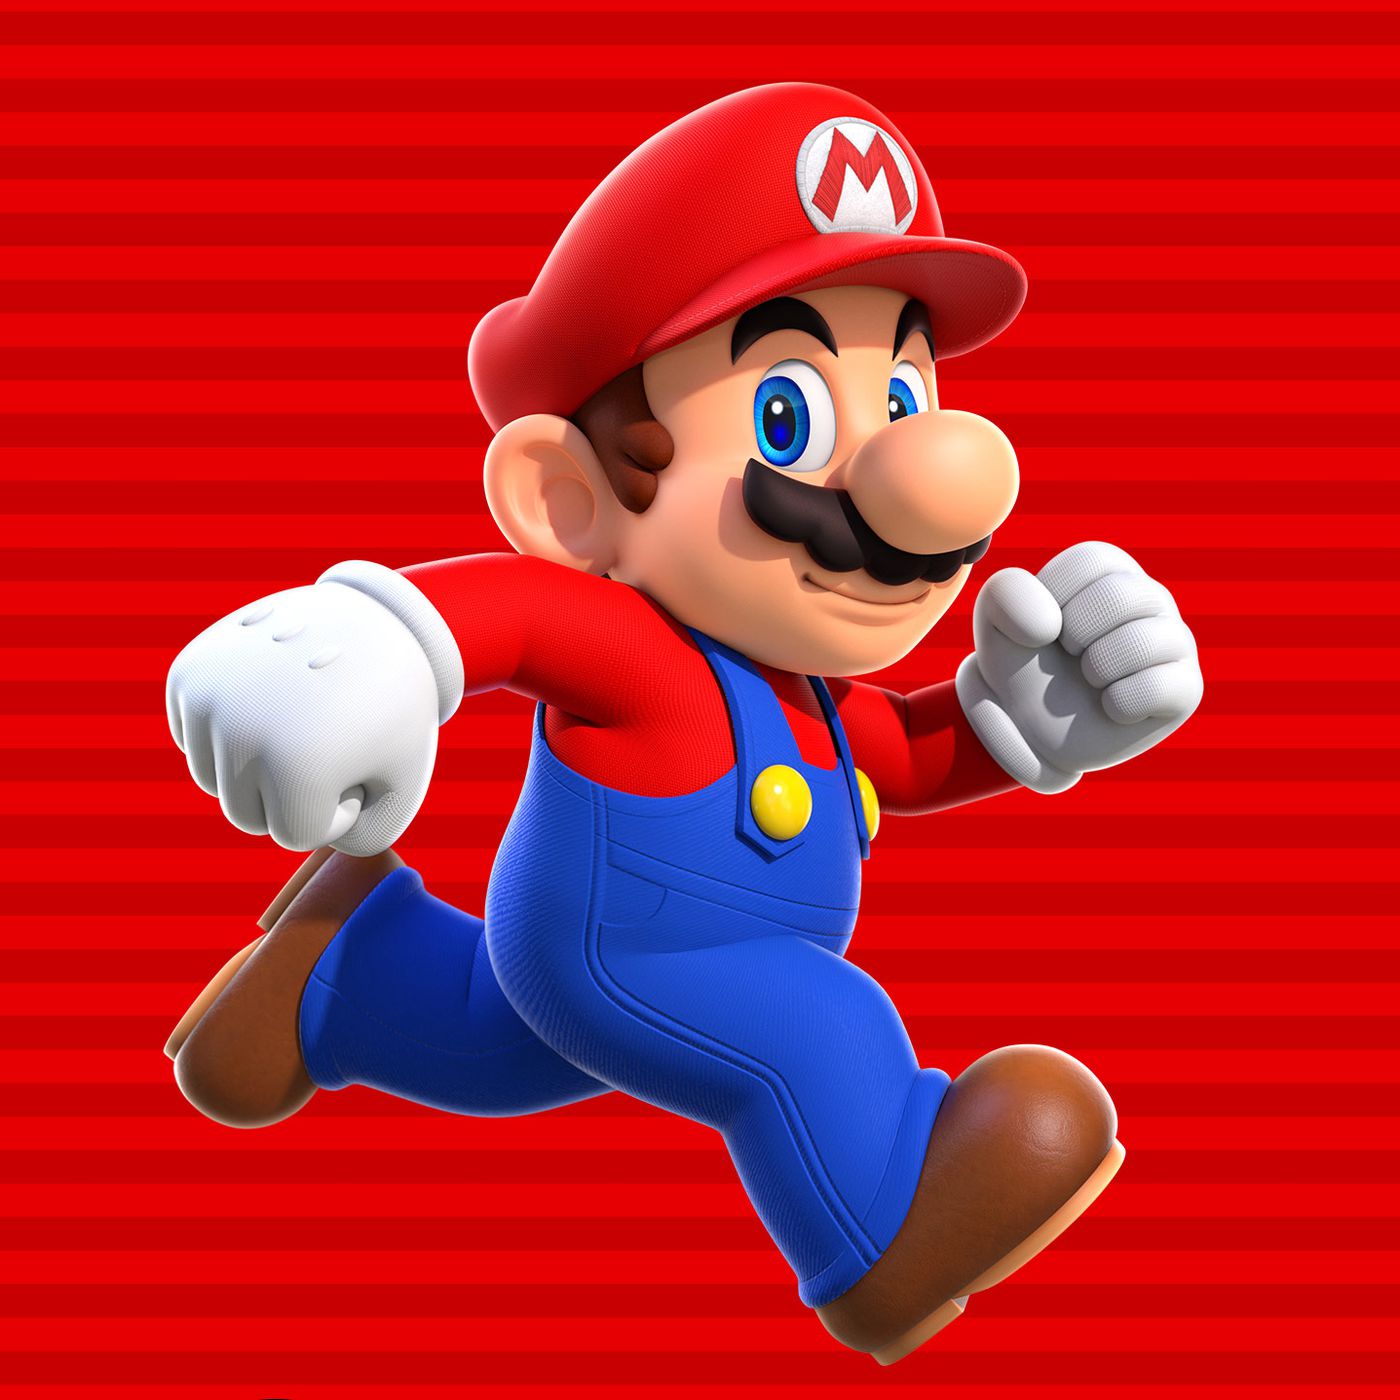 New Super Mario Run update to add Daisy, new mode and world